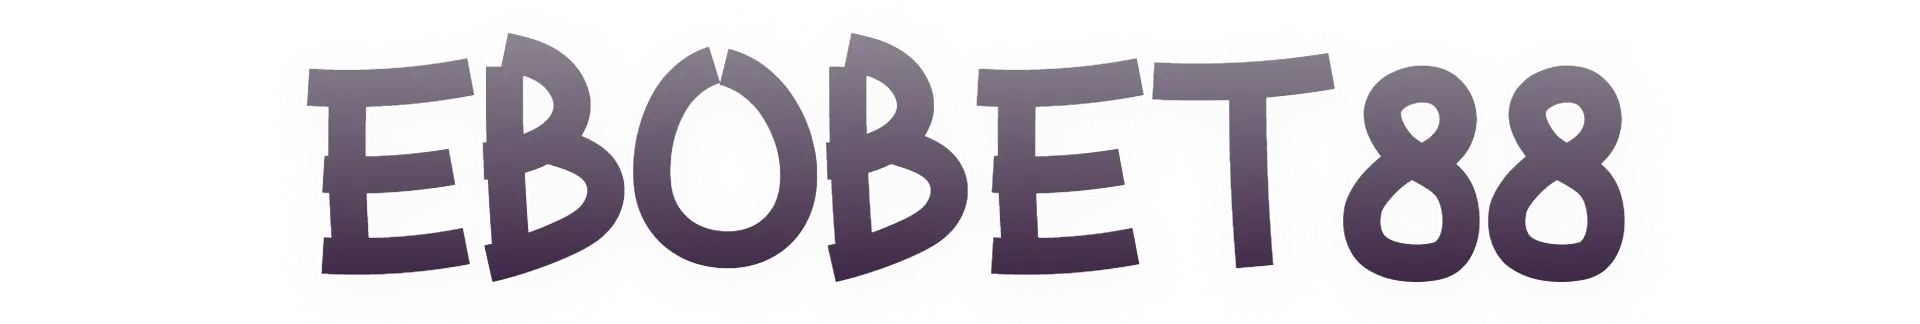 EBOBET88